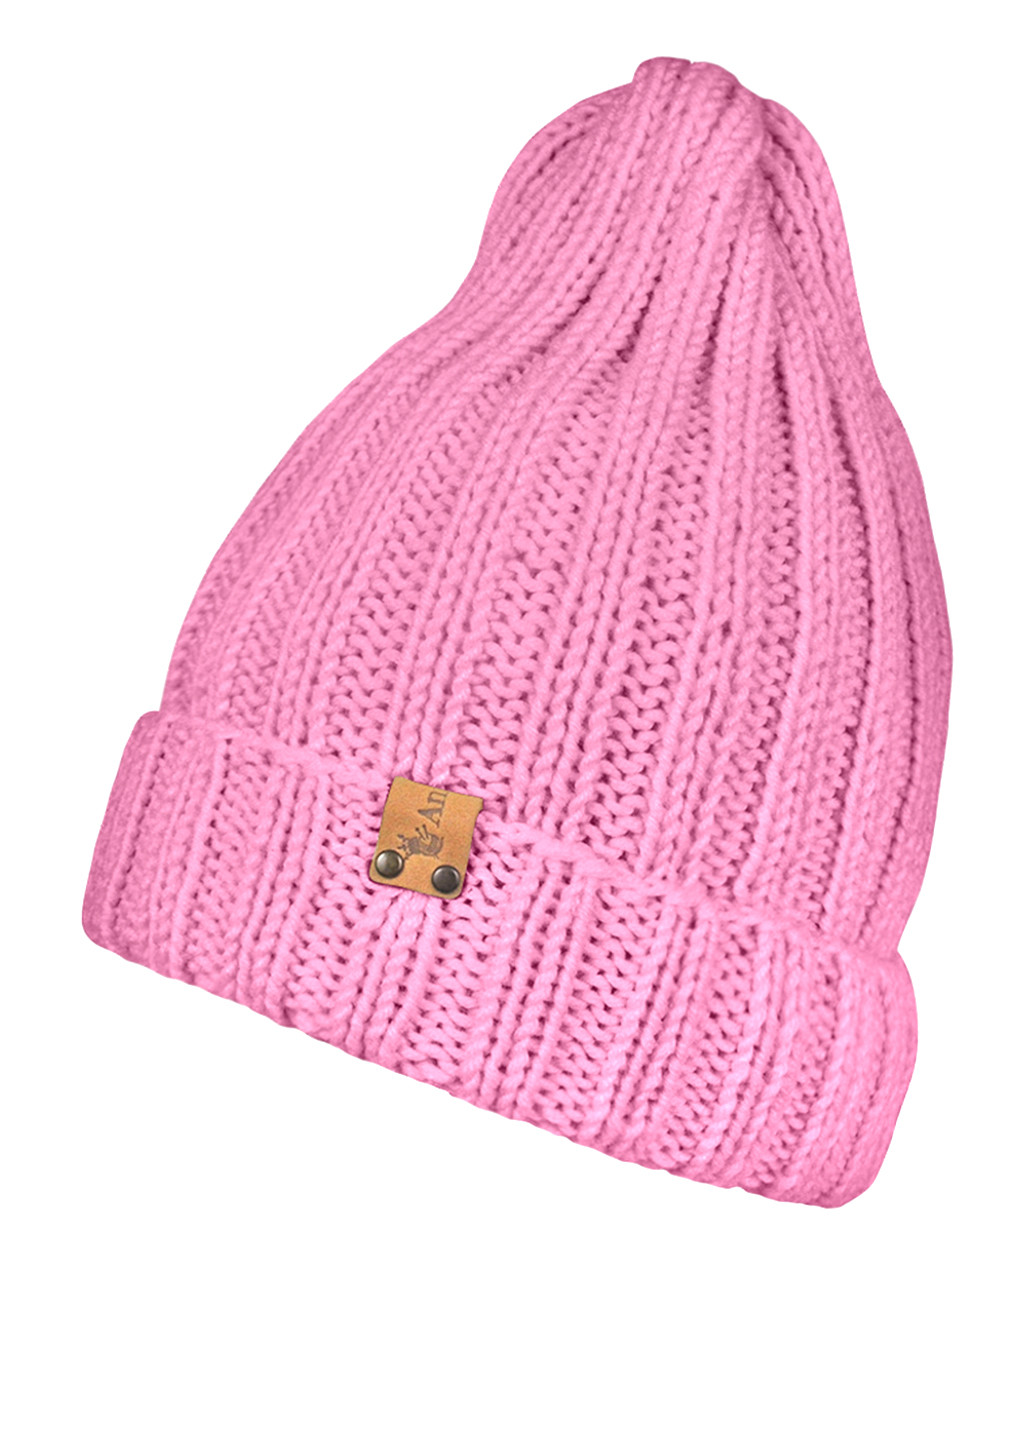 Рожевий зимній комплект (шапка, шарф-снуд) Anmerino